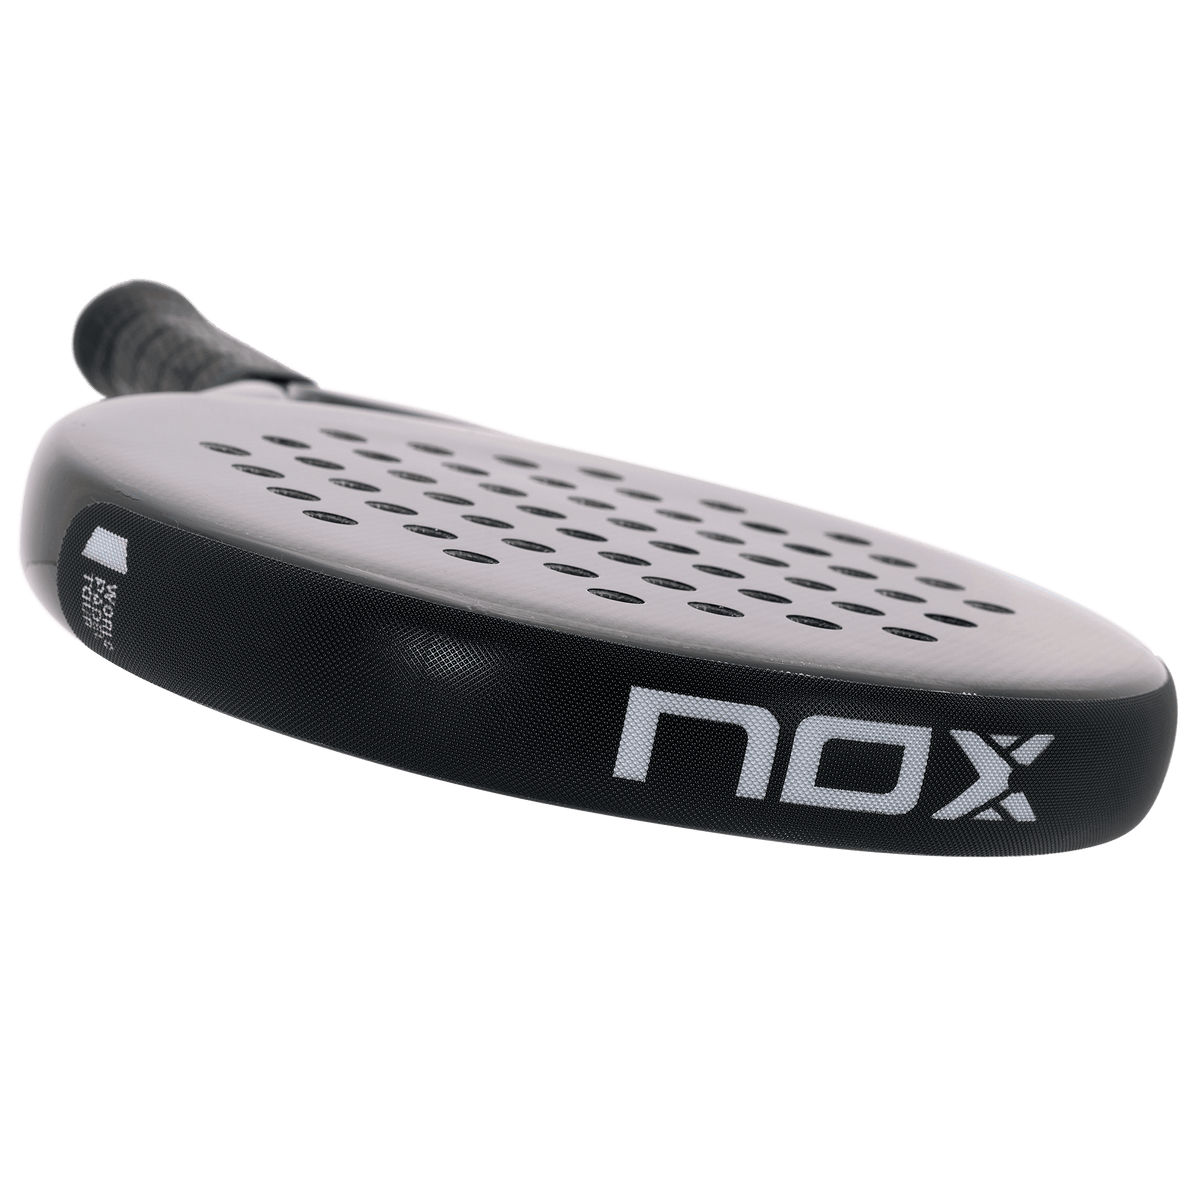 NOX World Padel Tour padel protector zwart - PadelAmigos